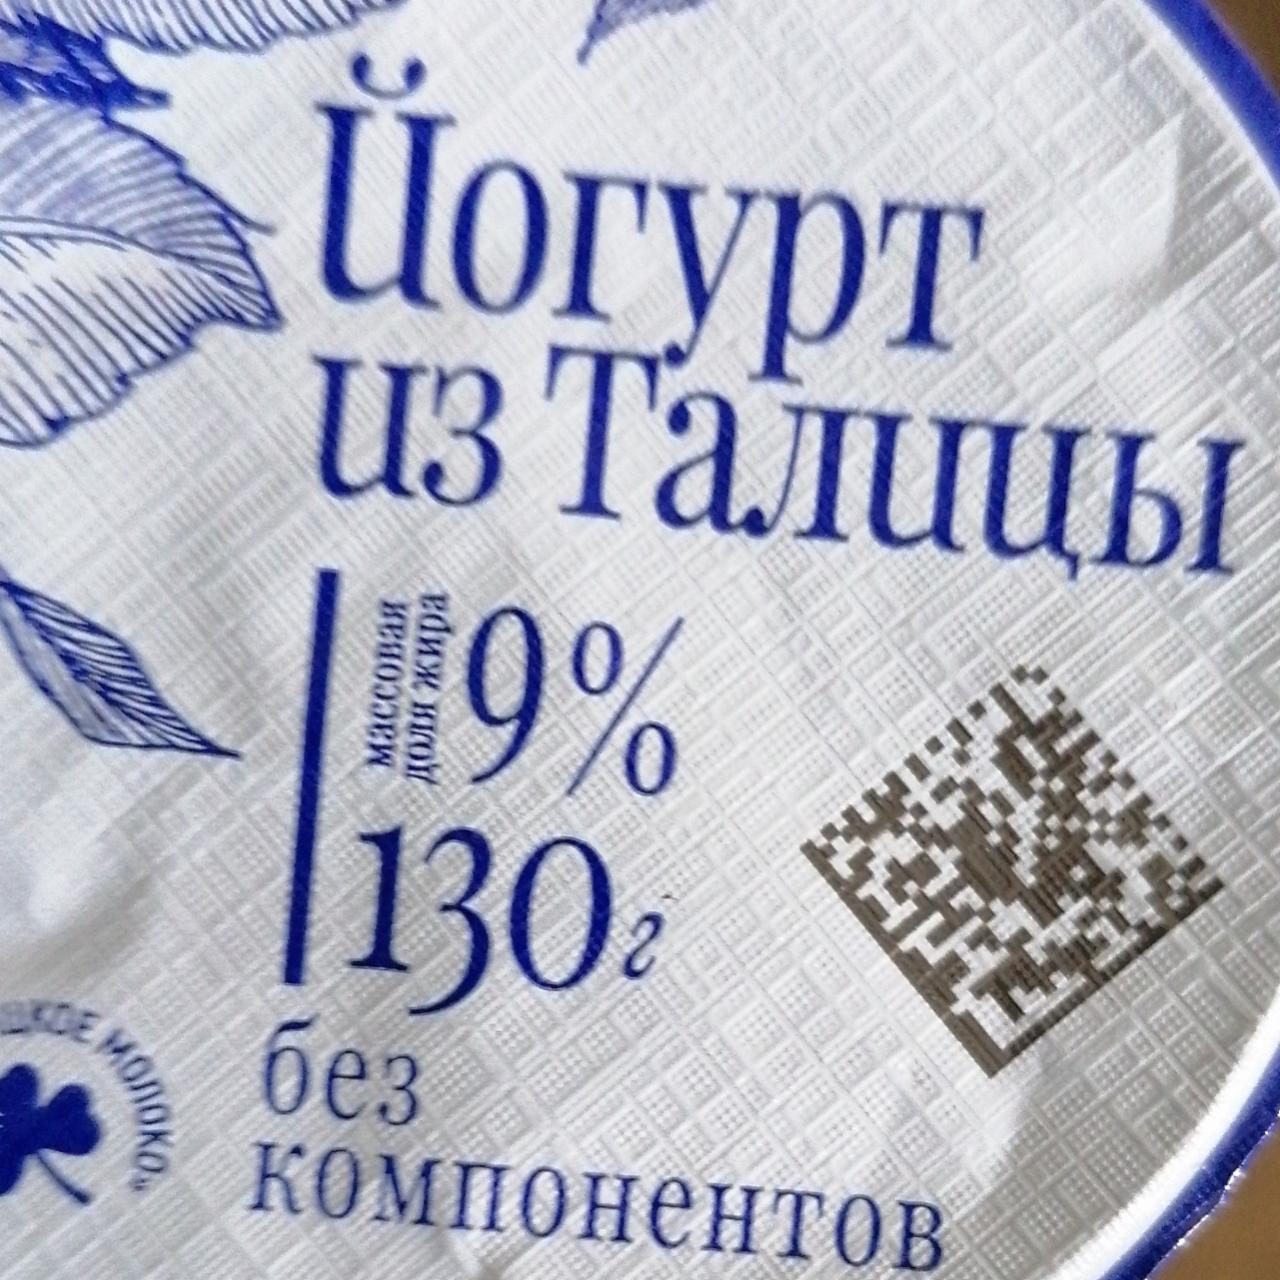 Фото - Йогурт 9 % из Талицы